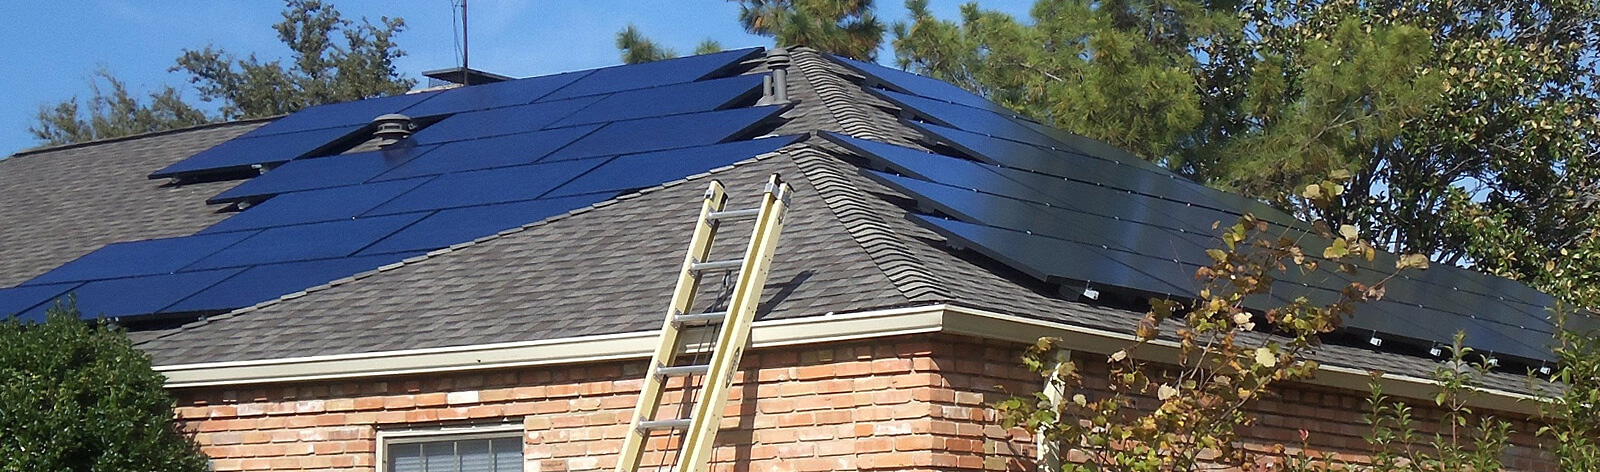 Residential Solar Modules